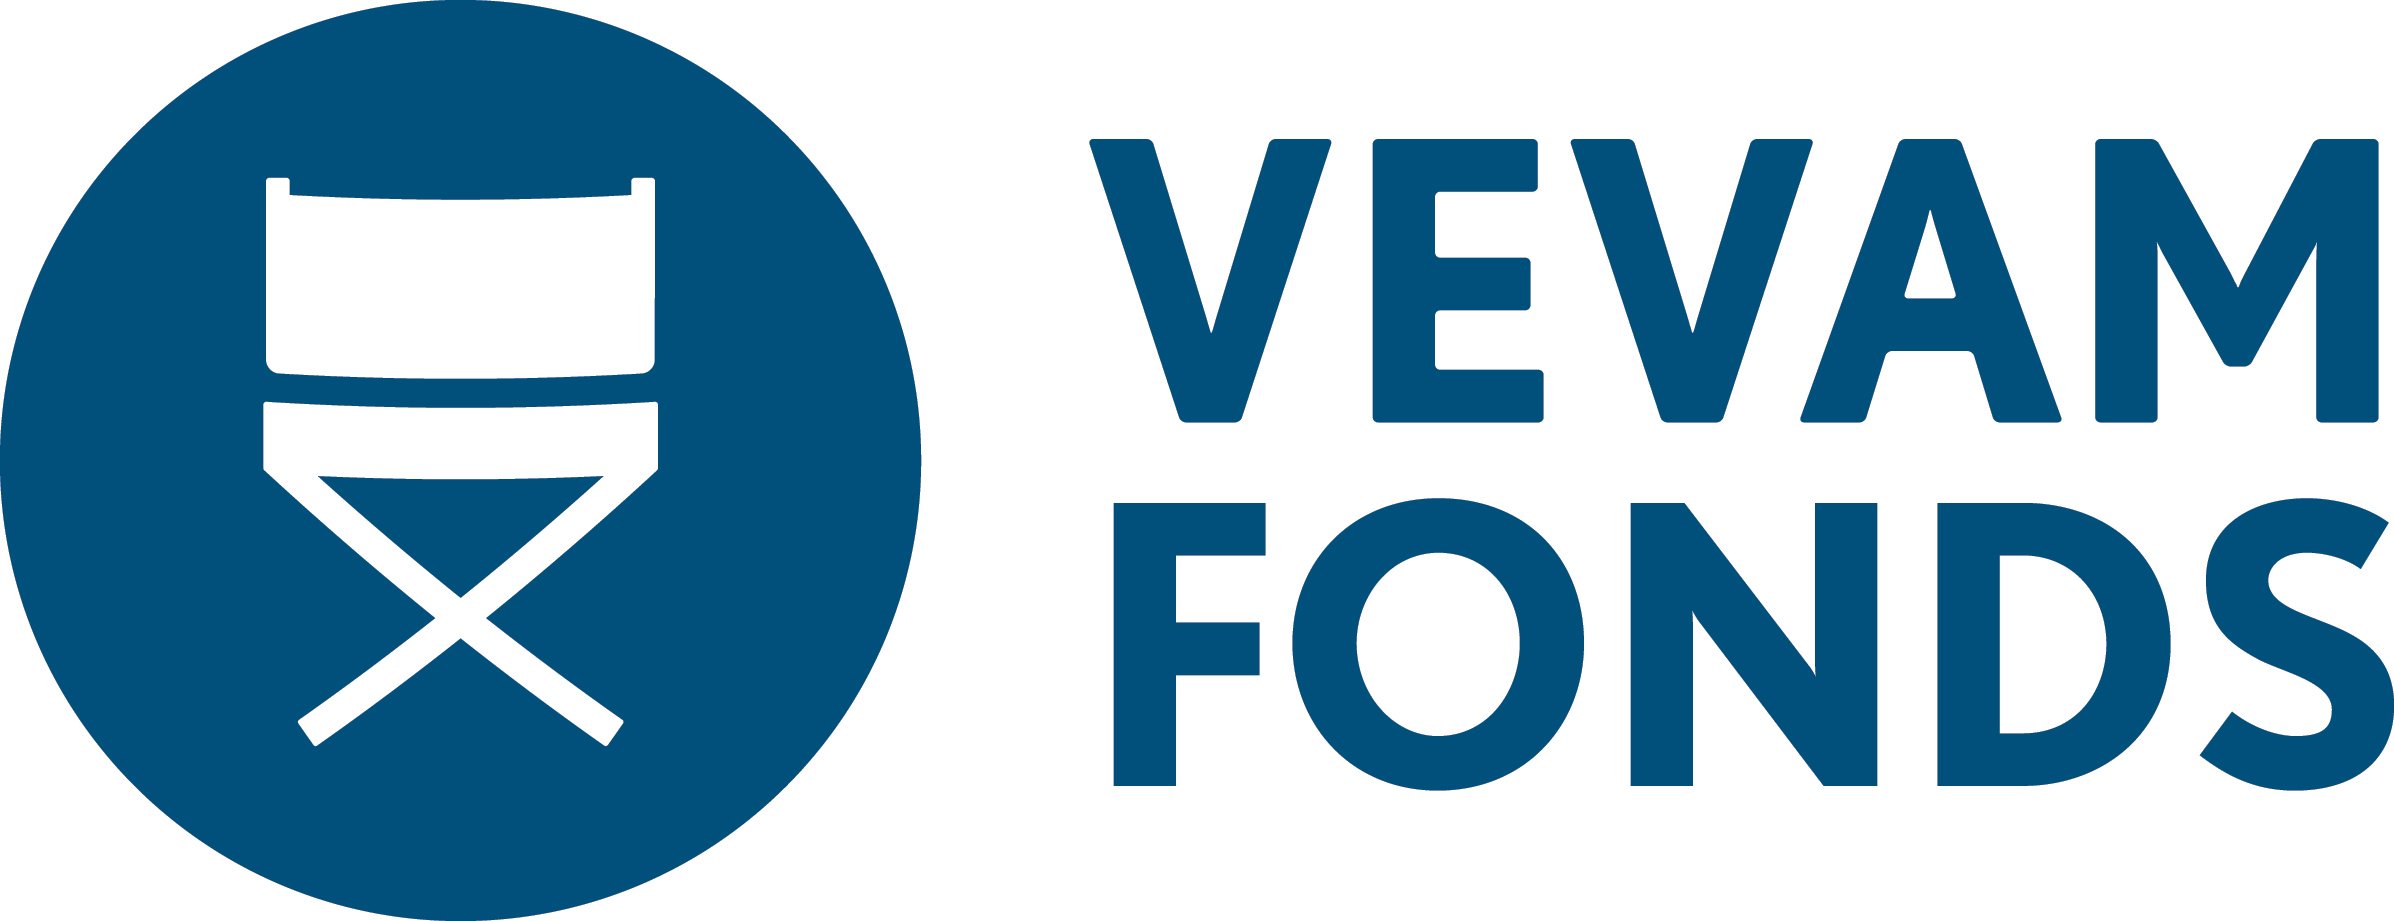 F2-VEVAM FONDS_logo_BLAUW.jpg